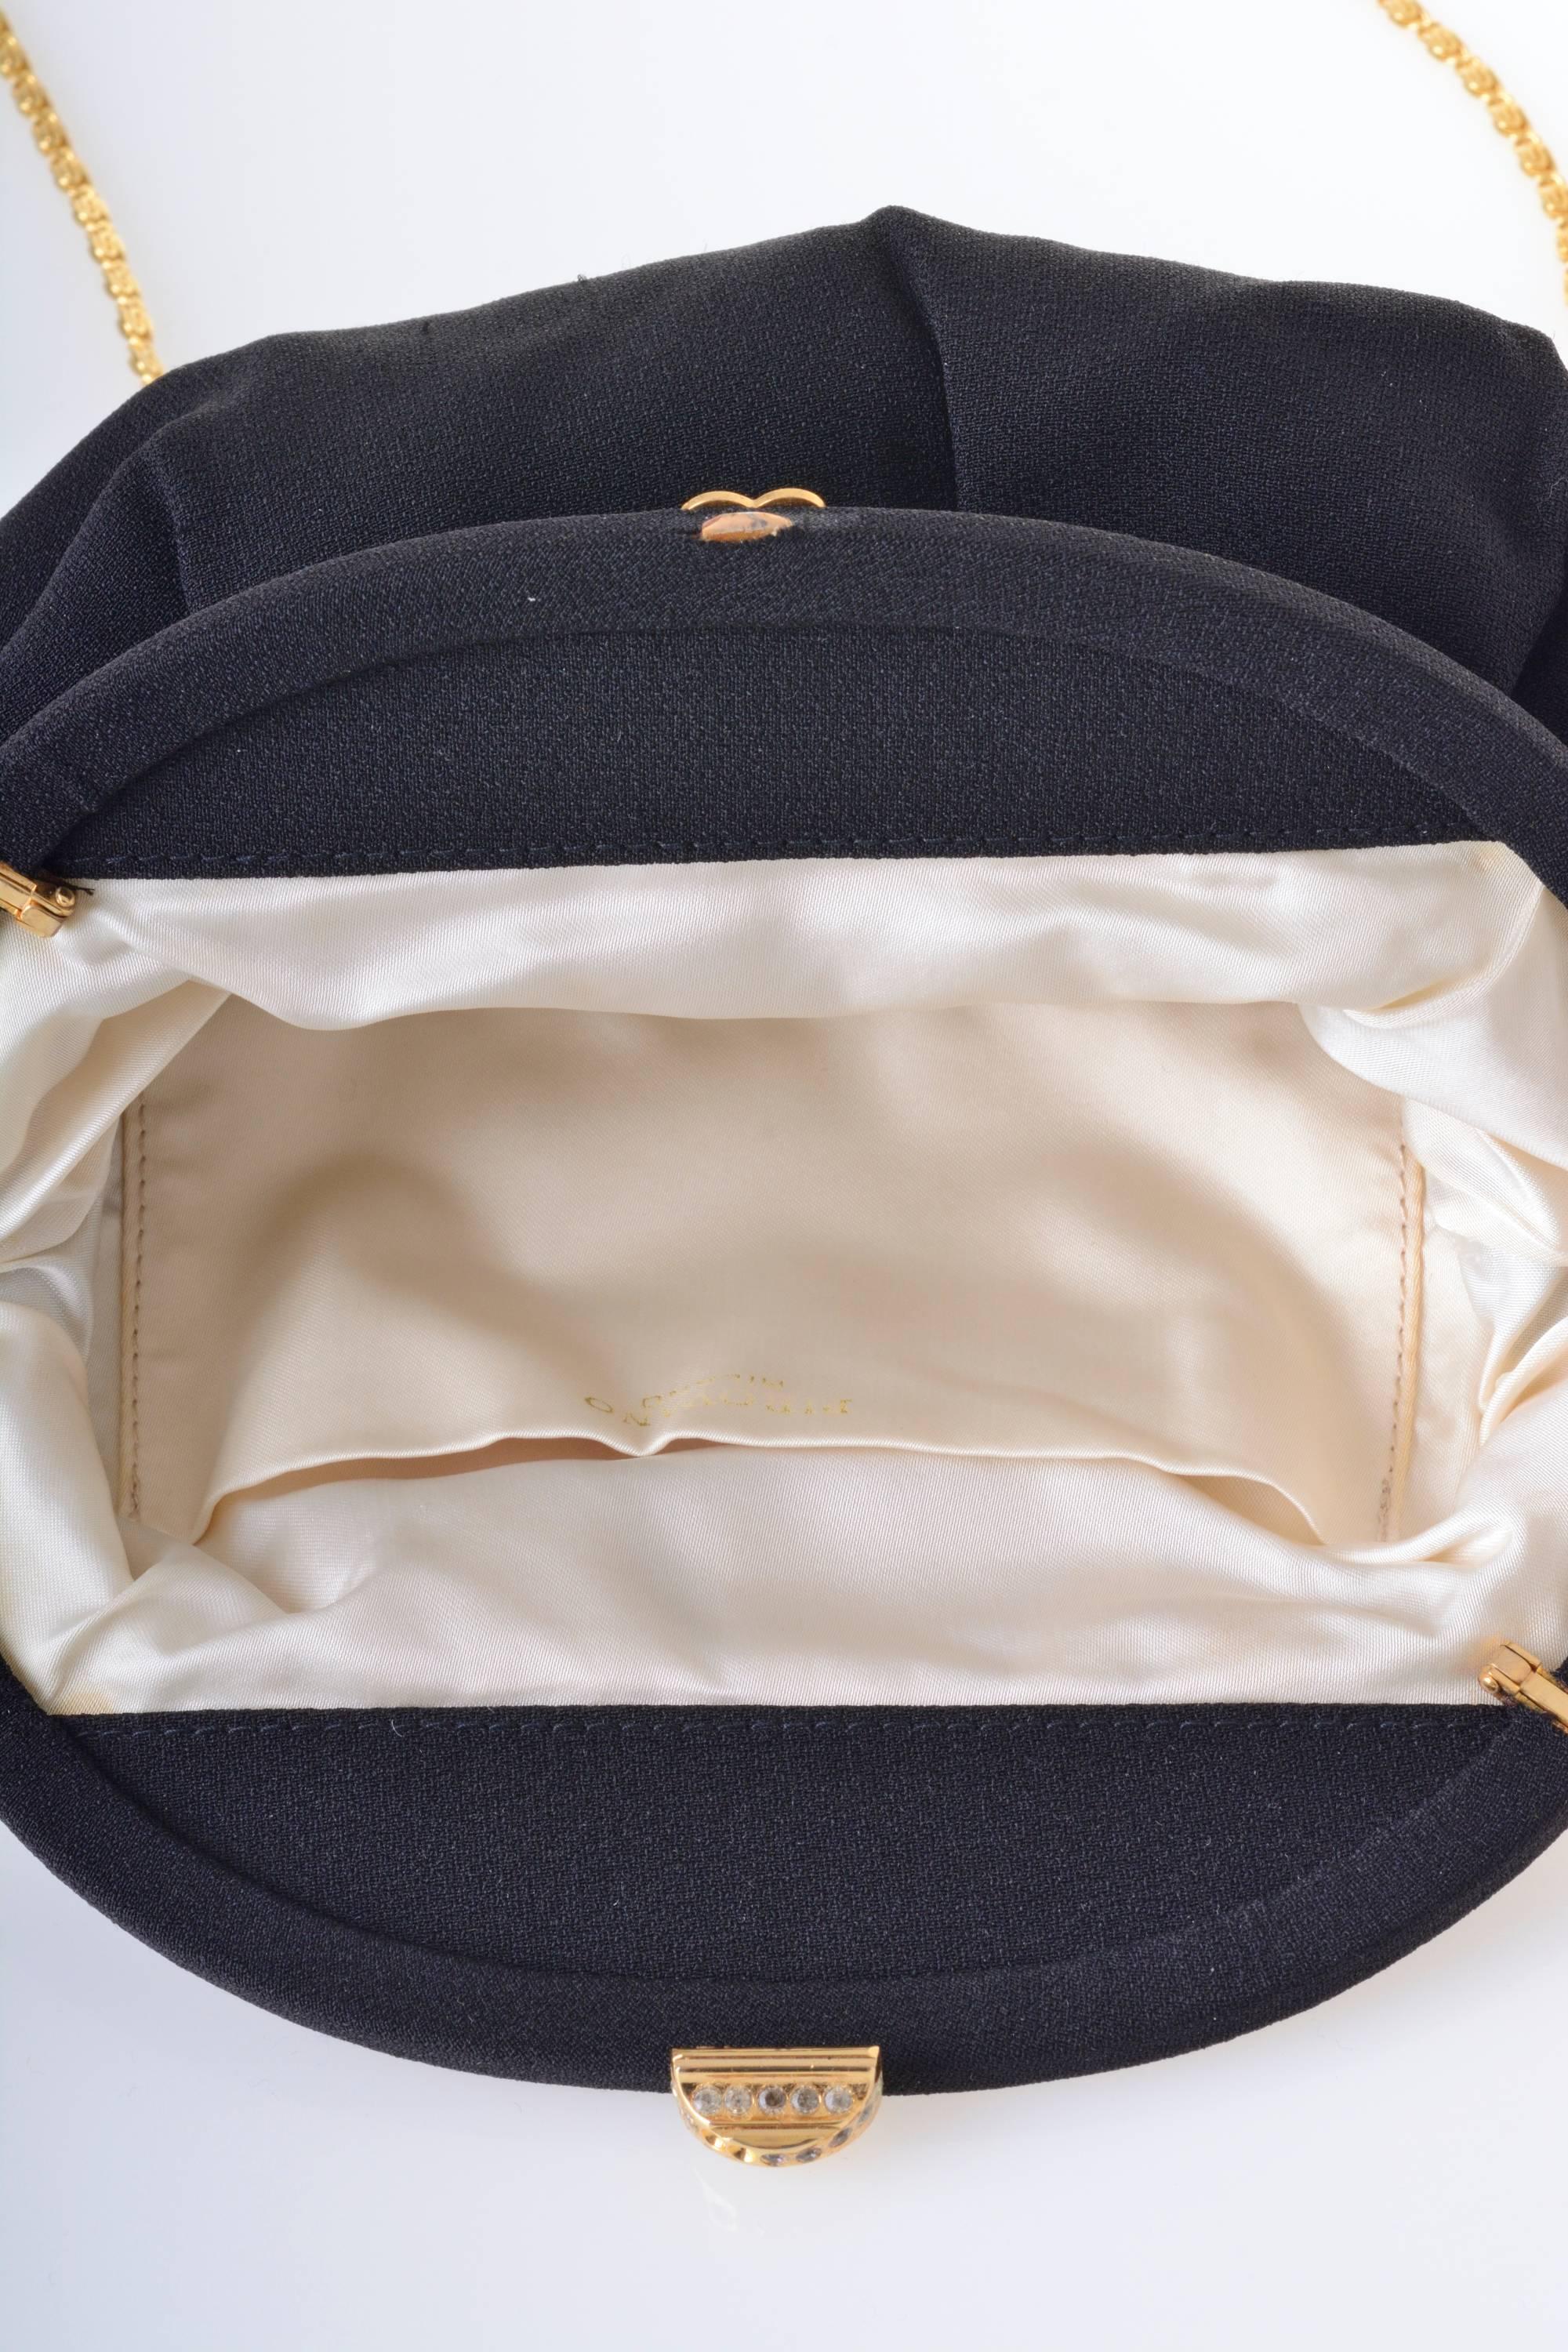 1950s PIROVANO Italian Couture Black Silk Purse Handbag 1